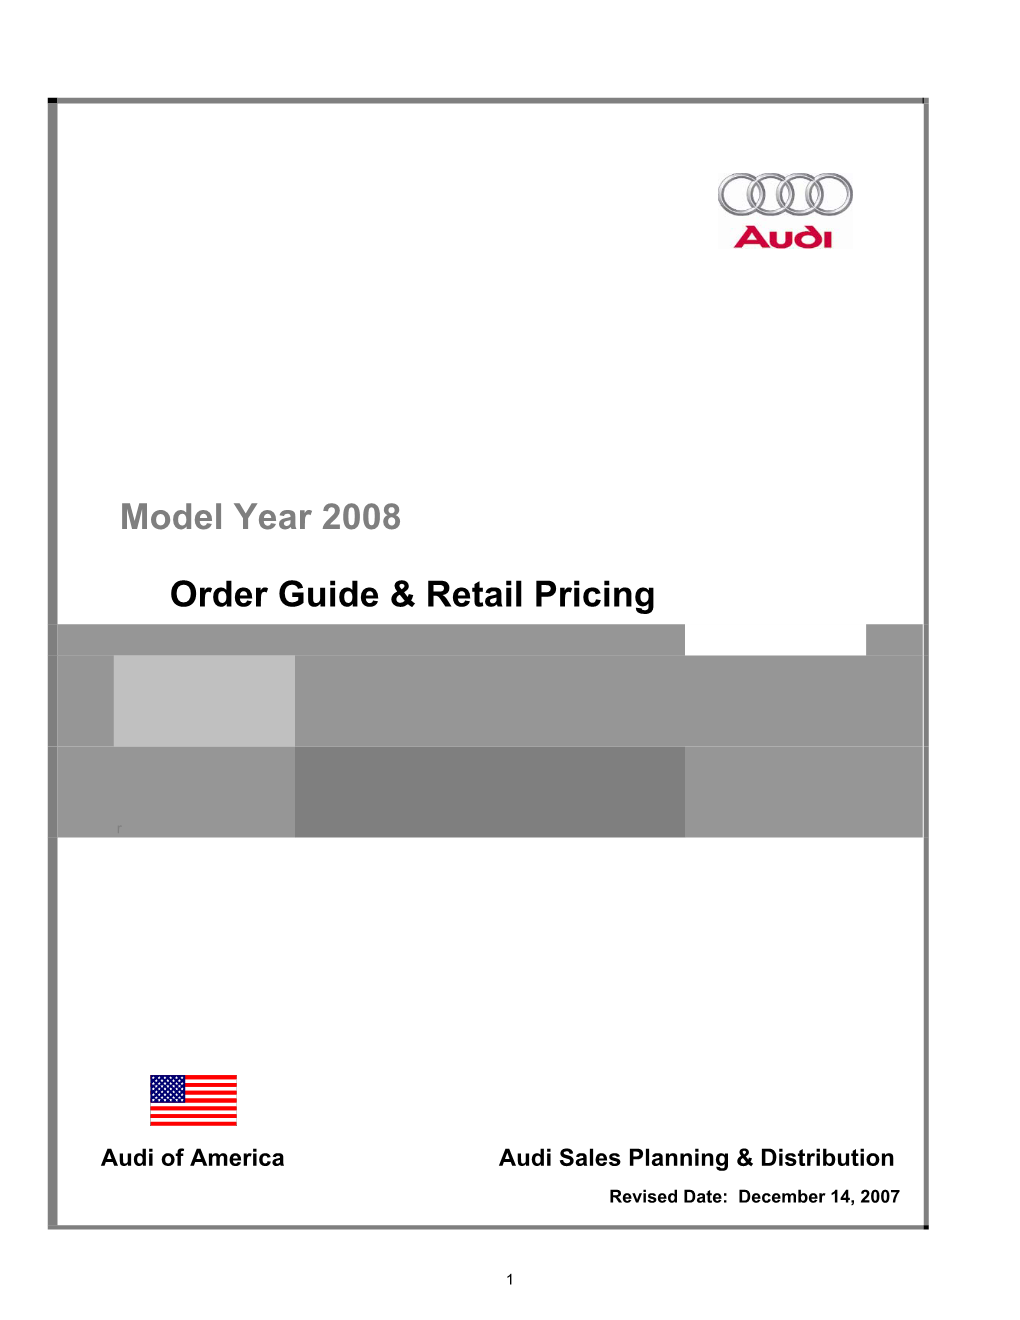 AUDI ORDER GUIDE MODEL YEAR 2008- USA (Retail)